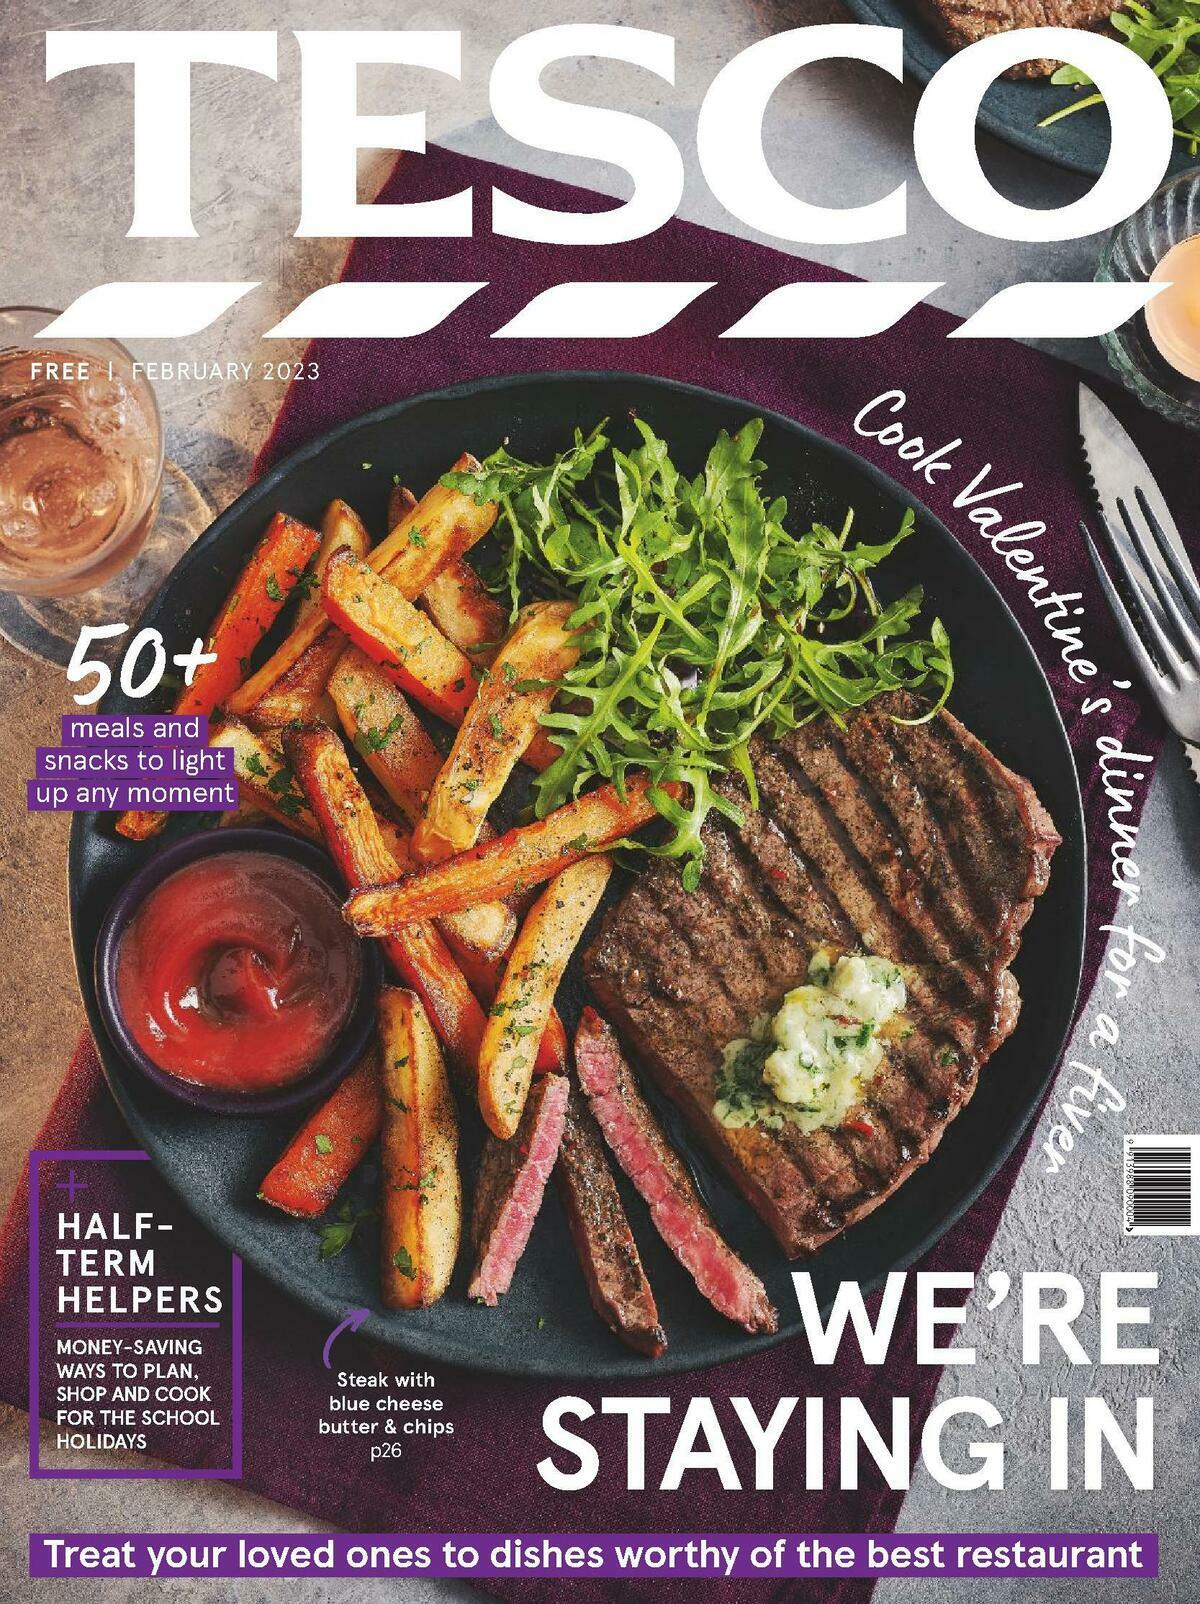 TESCO Magazine February Offers from 1 February